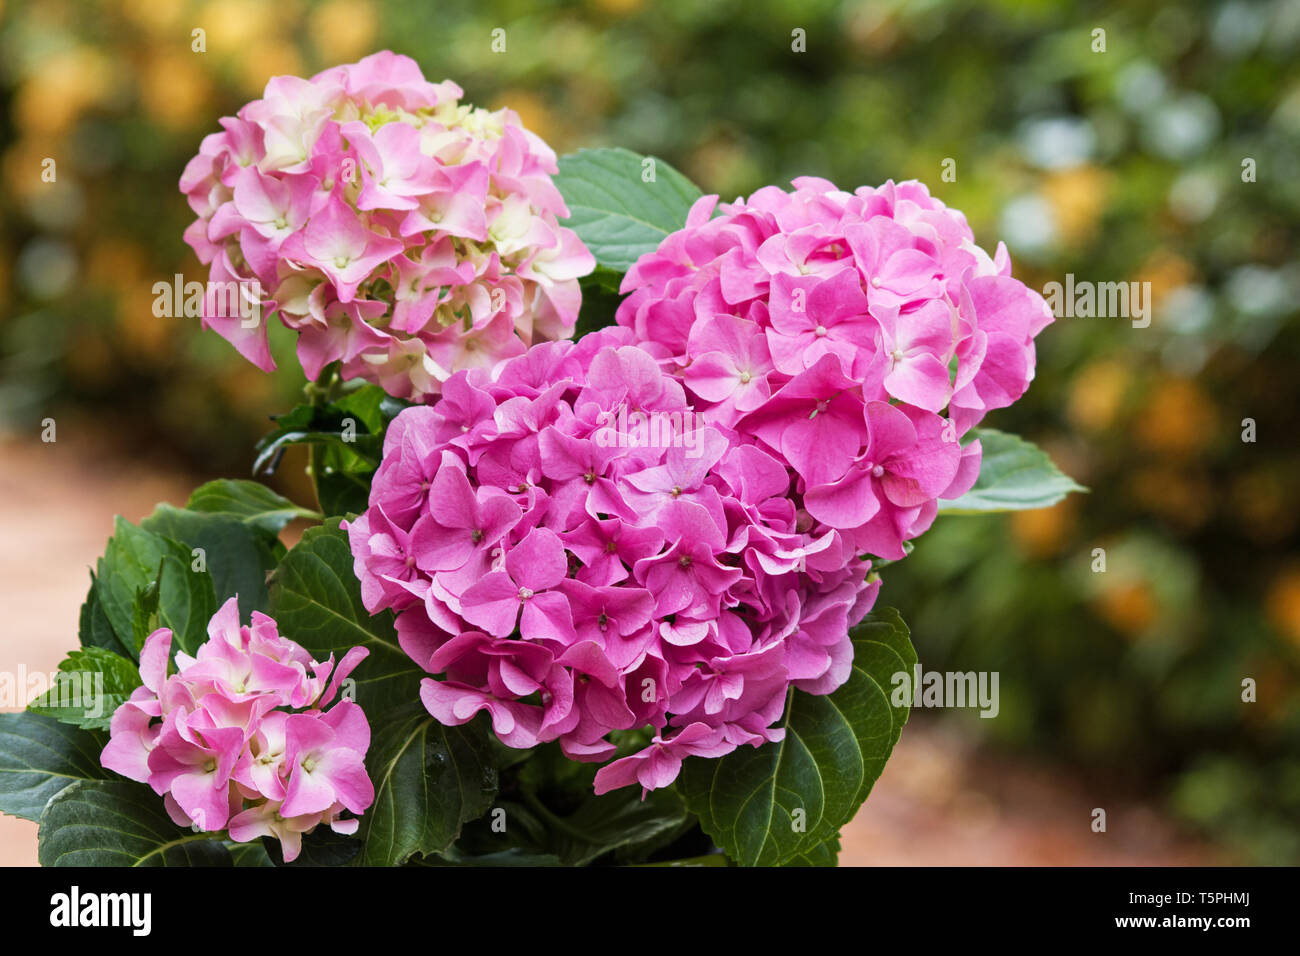 Rosa Hortensien im Garten Stockfoto